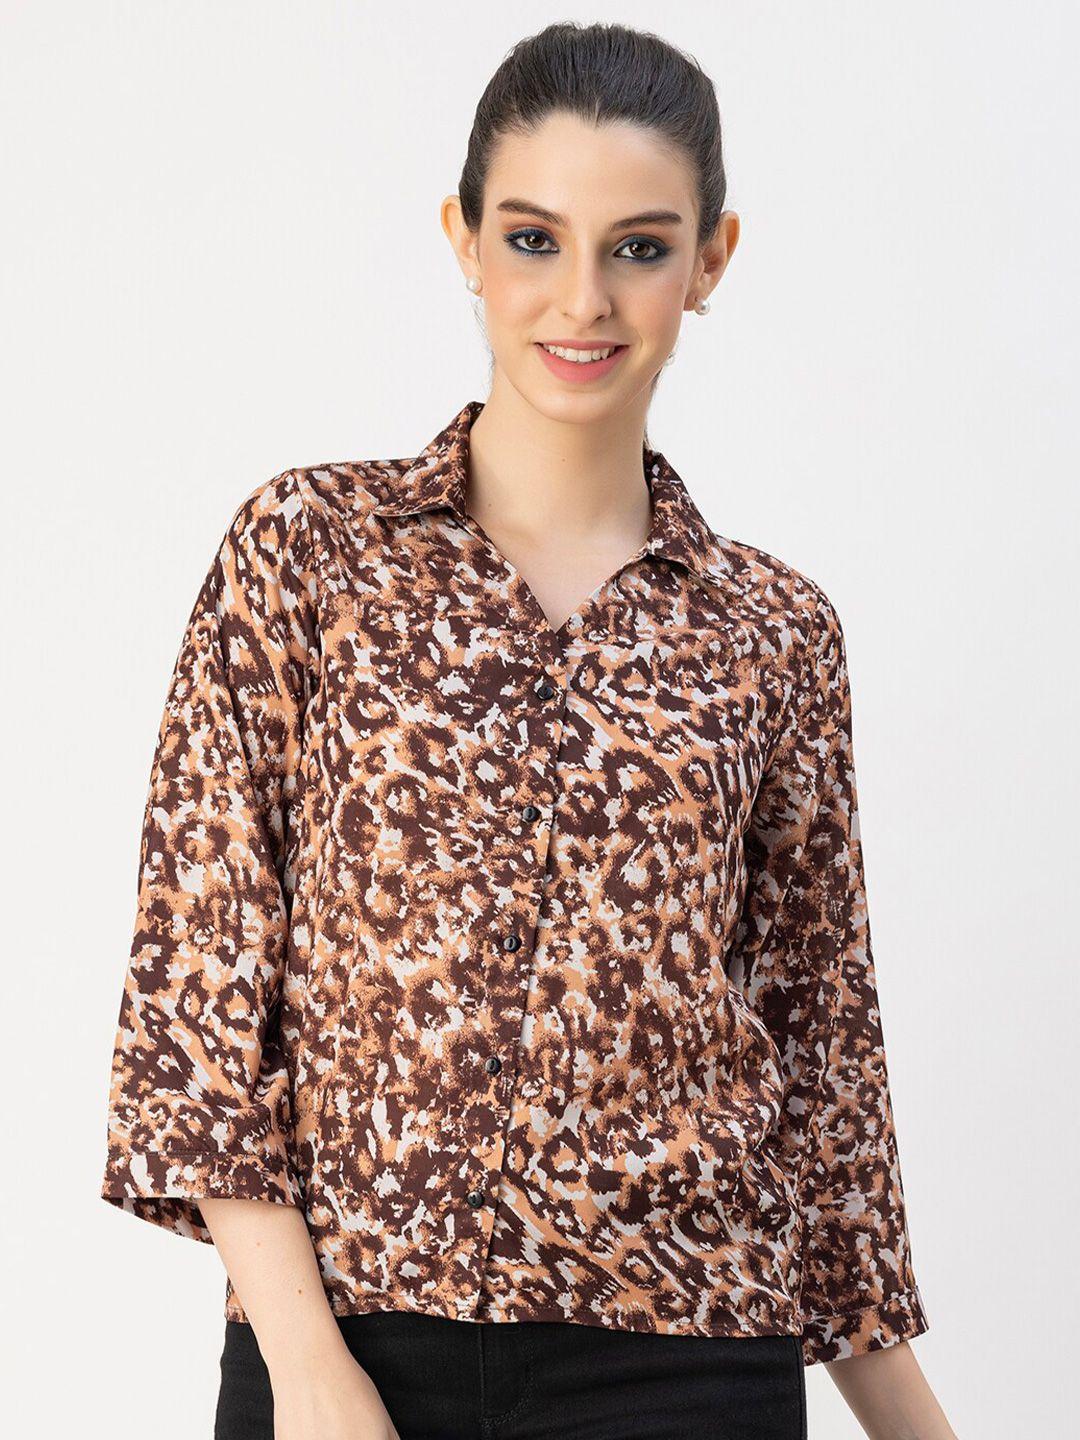 moomaya abstract printed georgette shirt style top